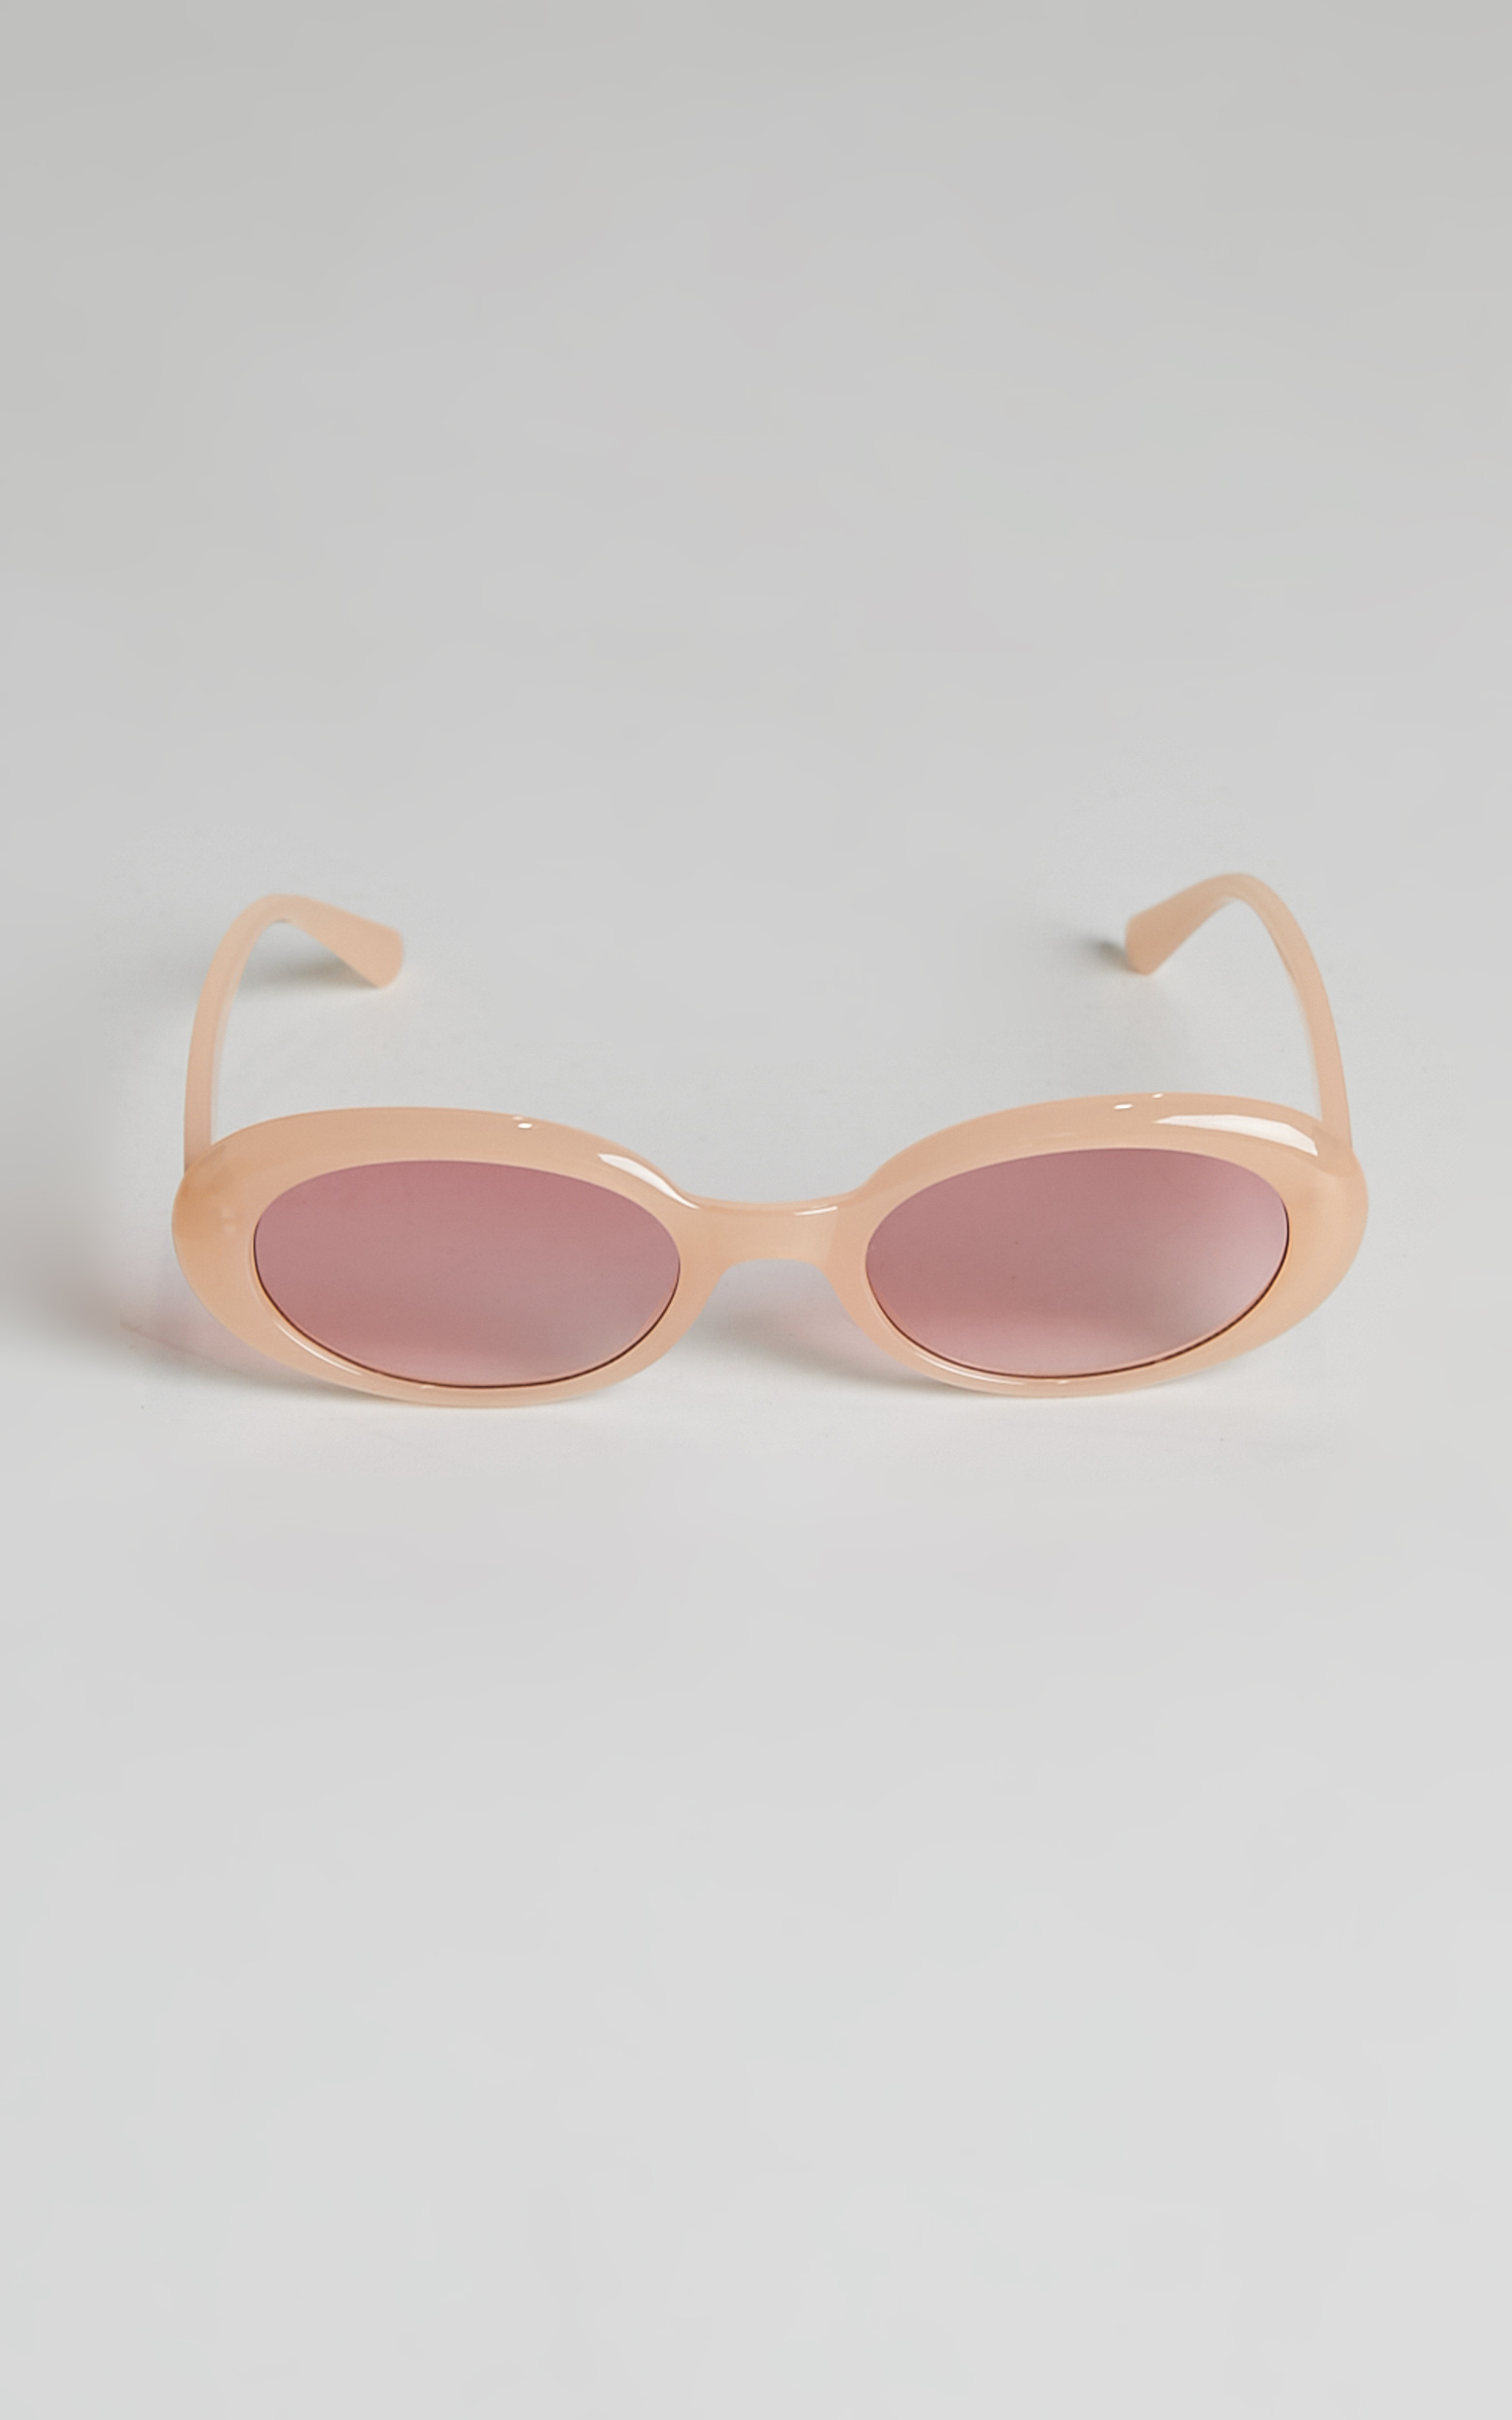 Czarina Retro Sunglasses in Pink - NoSize, PNK1, hi-res image number null